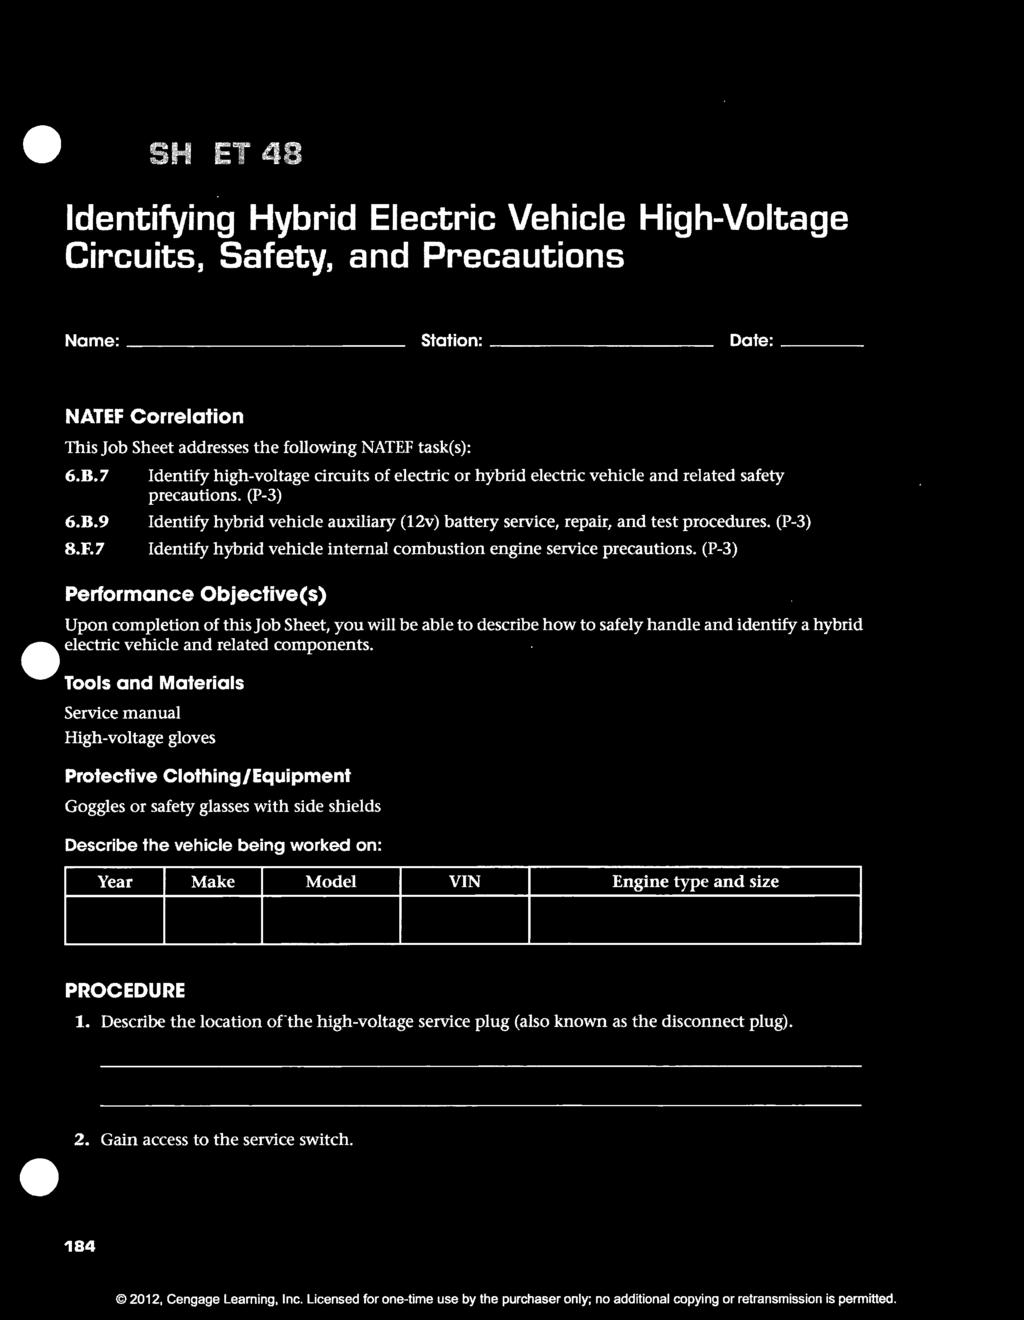 (P-3) Identify hybrid vehicle internal combustion engine service precautions.